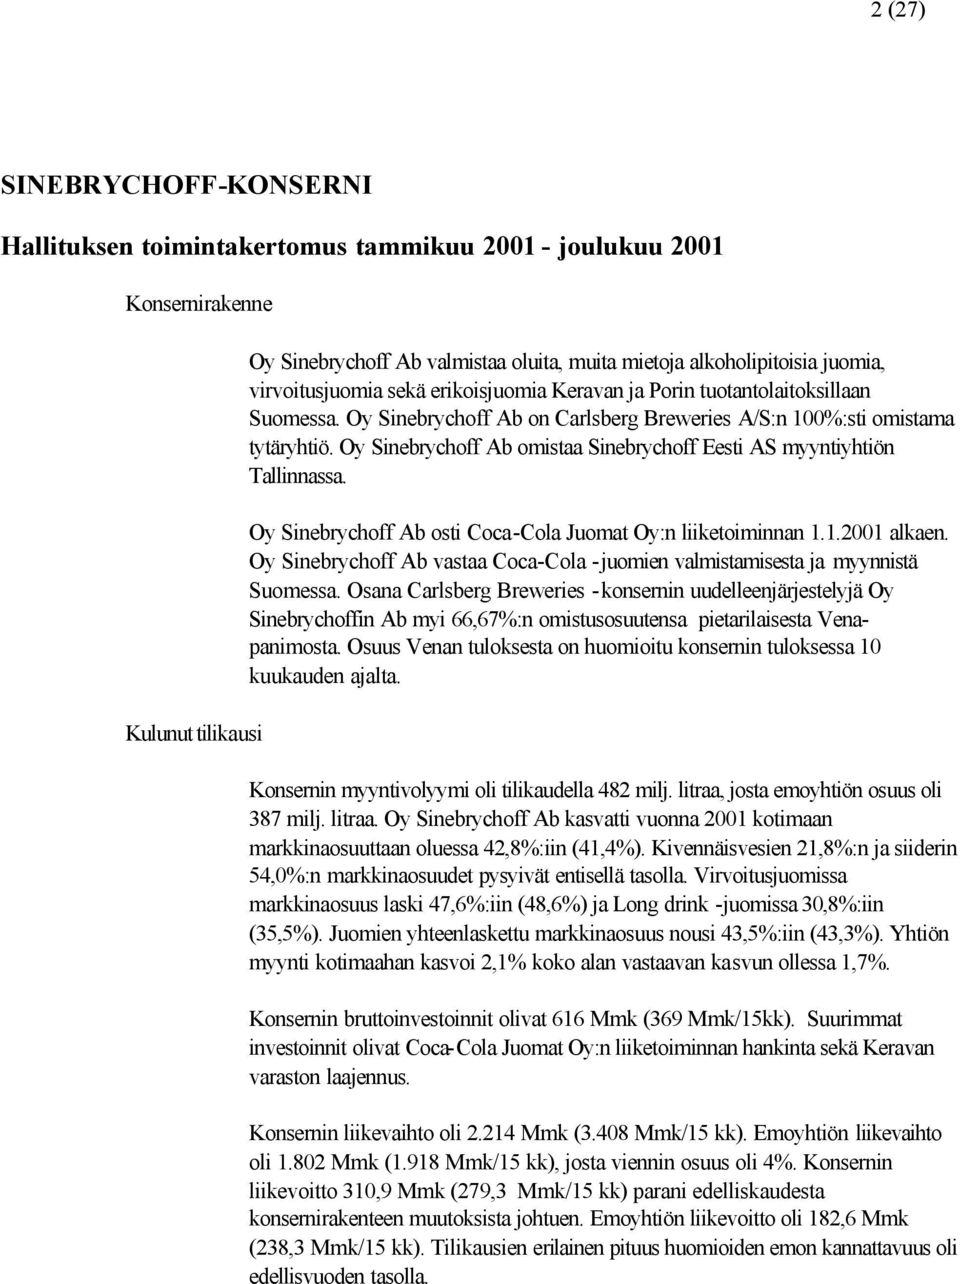 Oy Sinebrychoff Ab omistaa Sinebrychoff Eesti AS myyntiyhtiön Tallinnassa. Oy Sinebrychoff Ab osti Coca-Cola Juomat Oy:n liiketoiminnan 1.1.2001 alkaen.